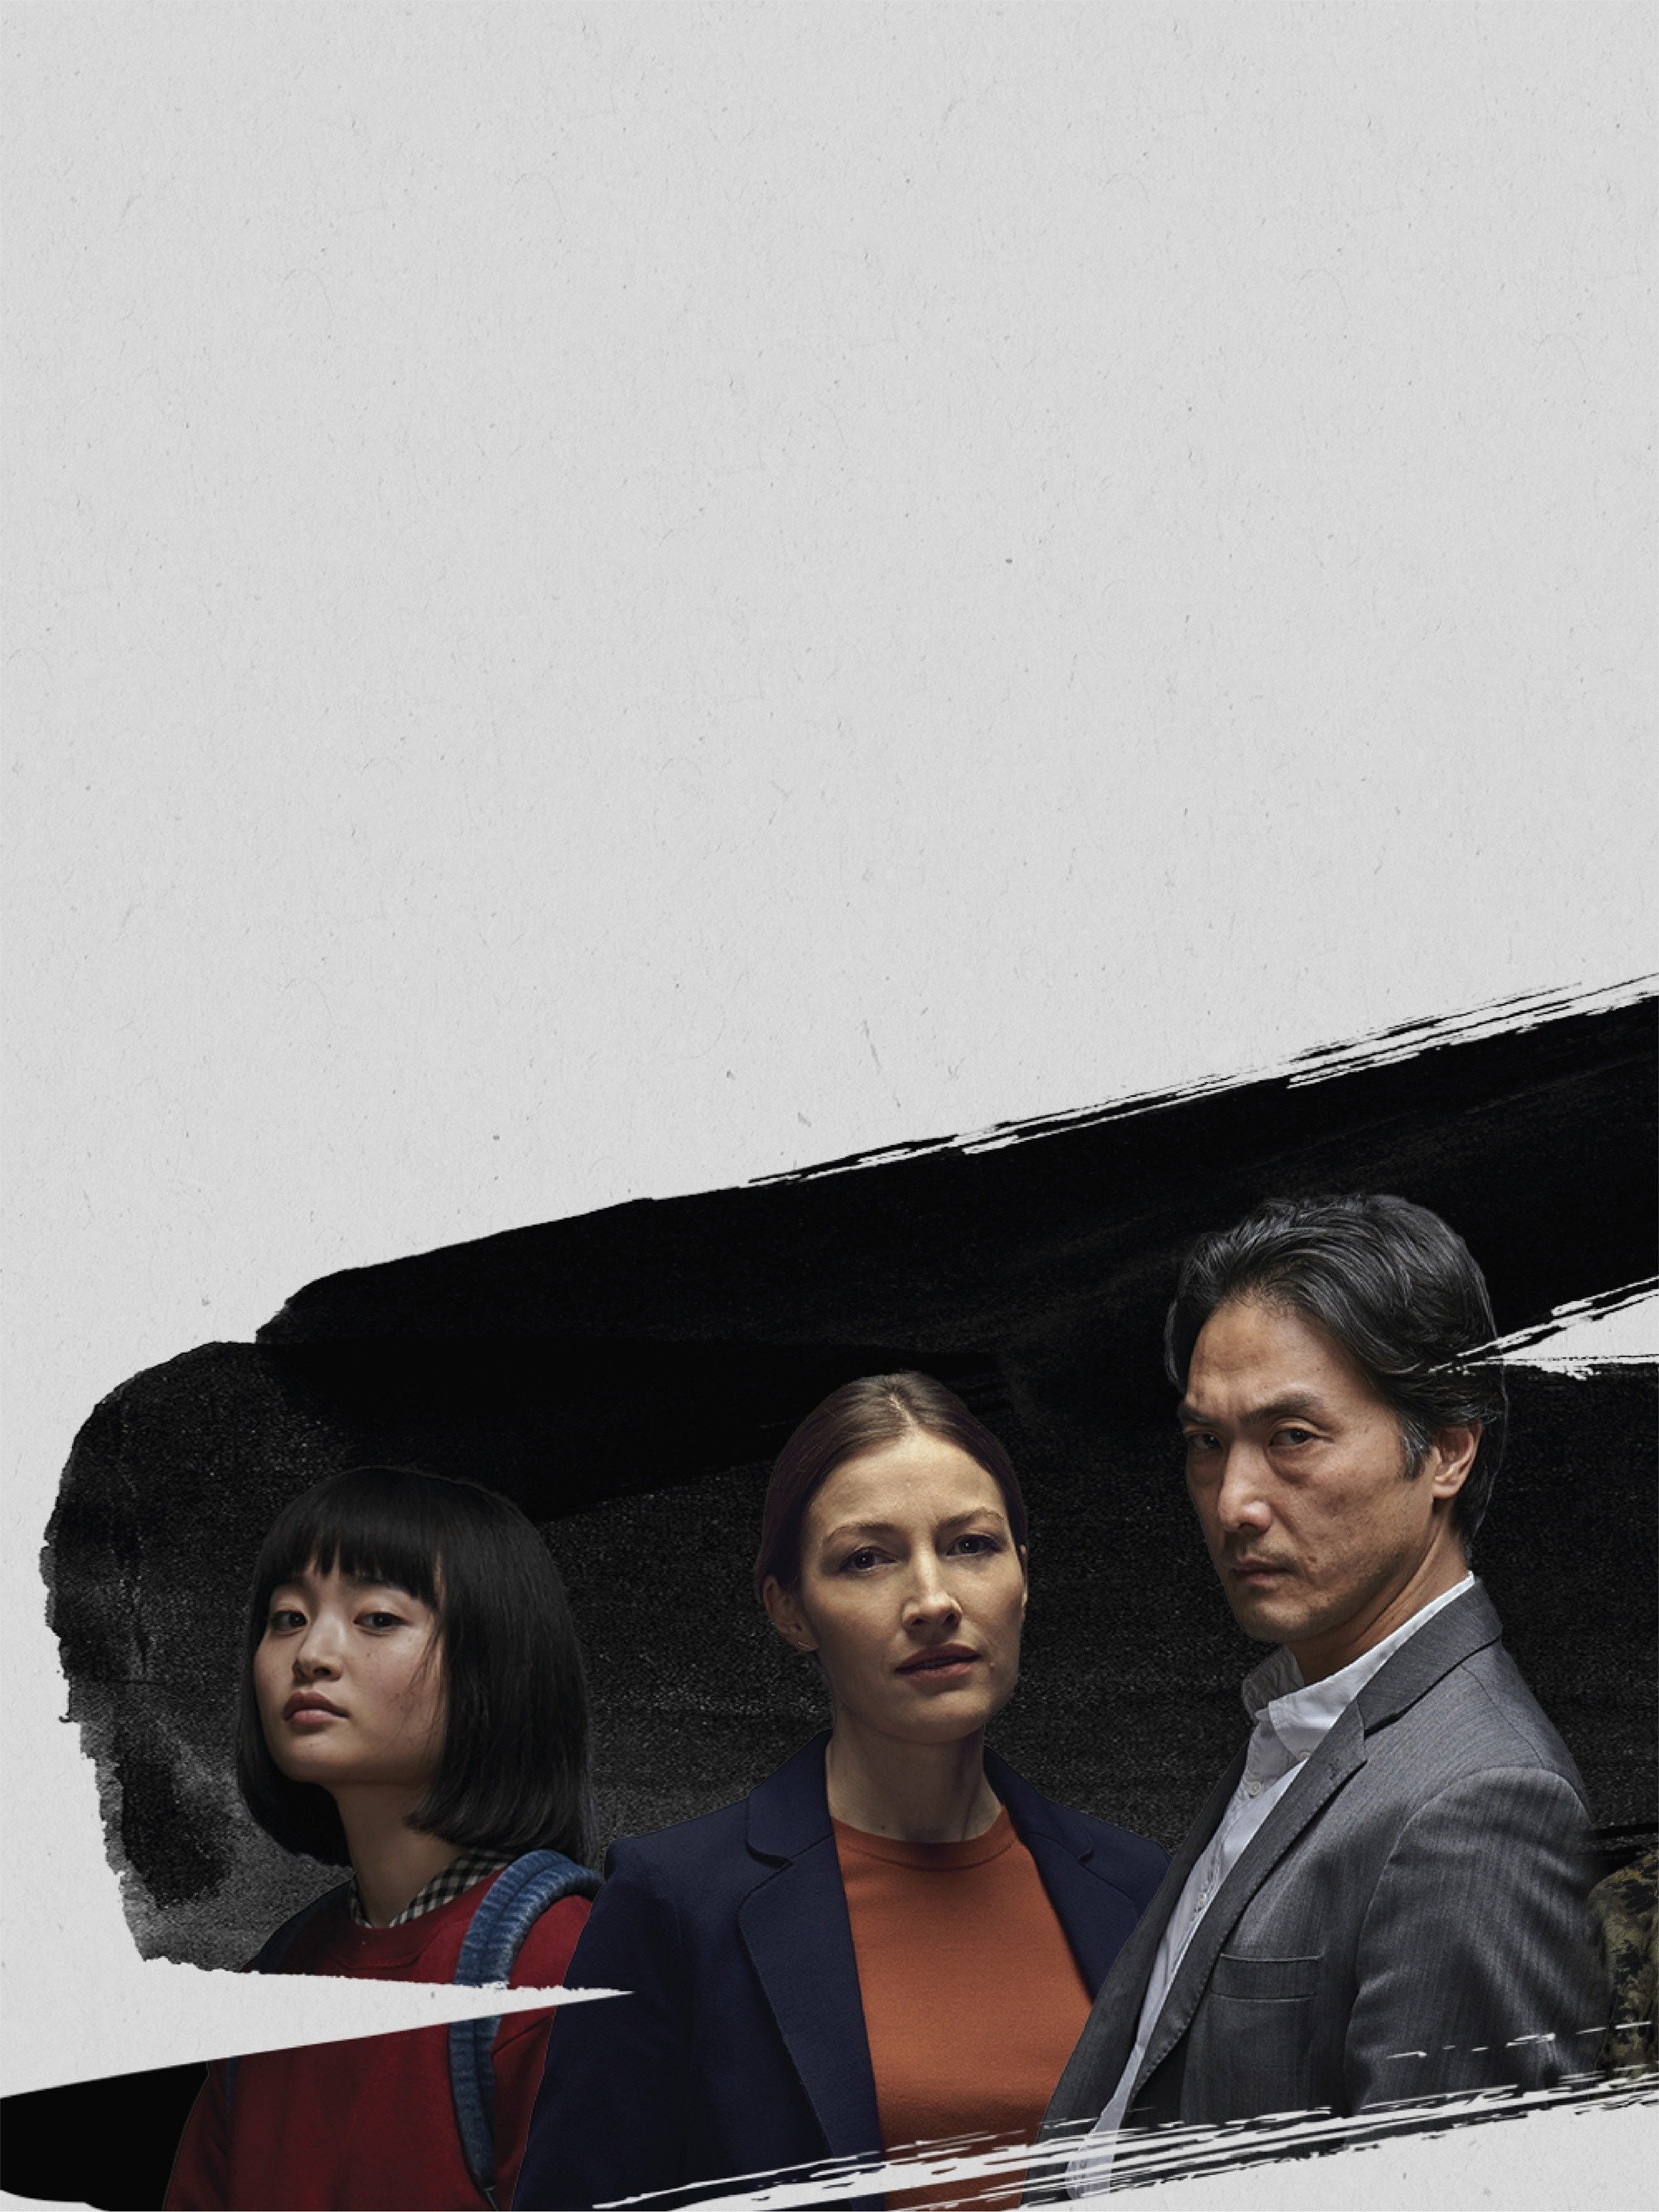 Giri/Haji review – Kelly Macdonald crime show is all killer and no thriller, TV crime drama